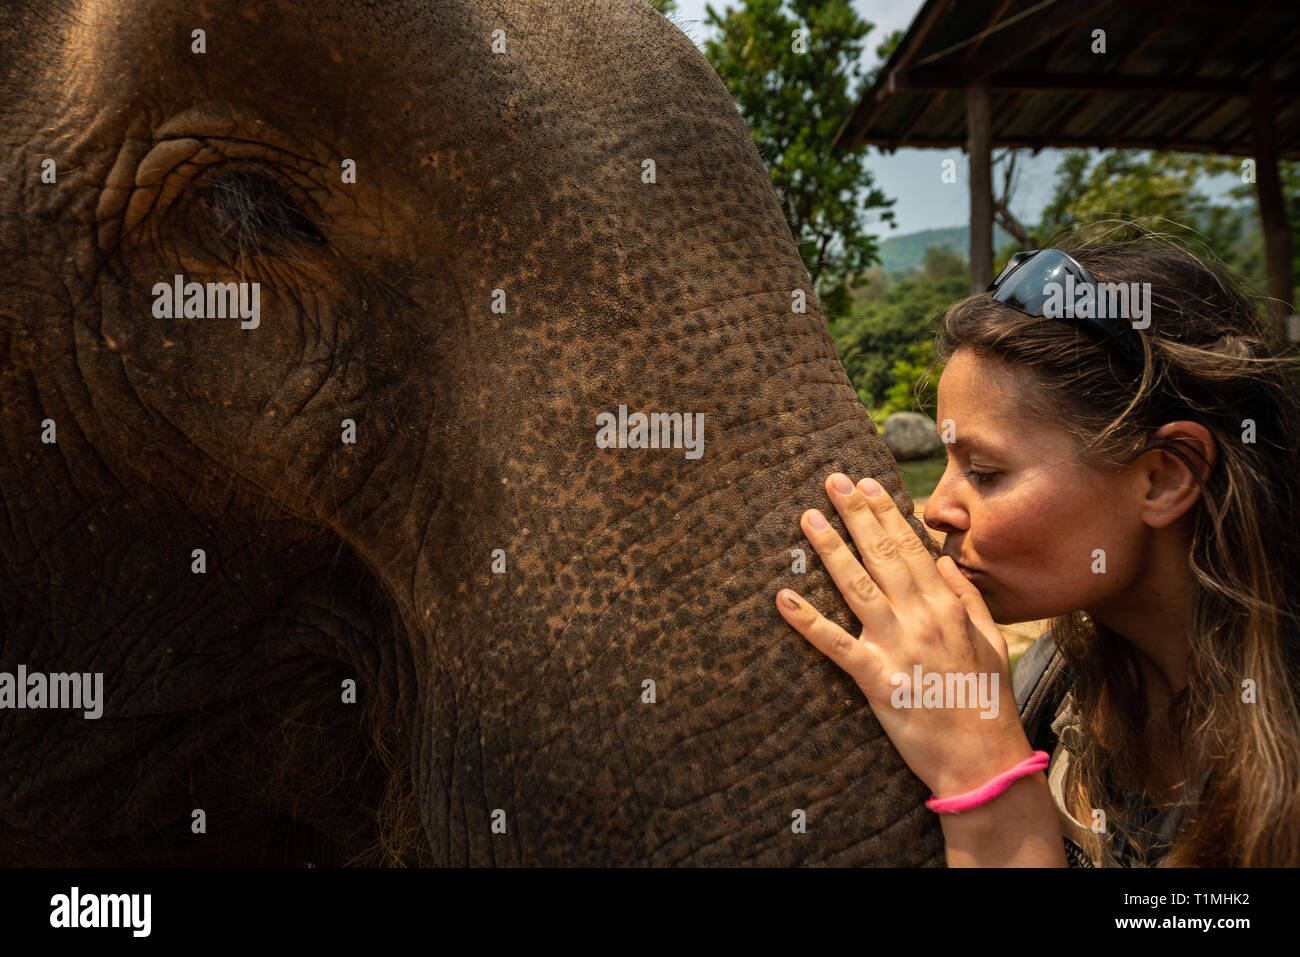 Kissing the elephant Girl Tourist kisses elephants trunk Close-up Stock Photo